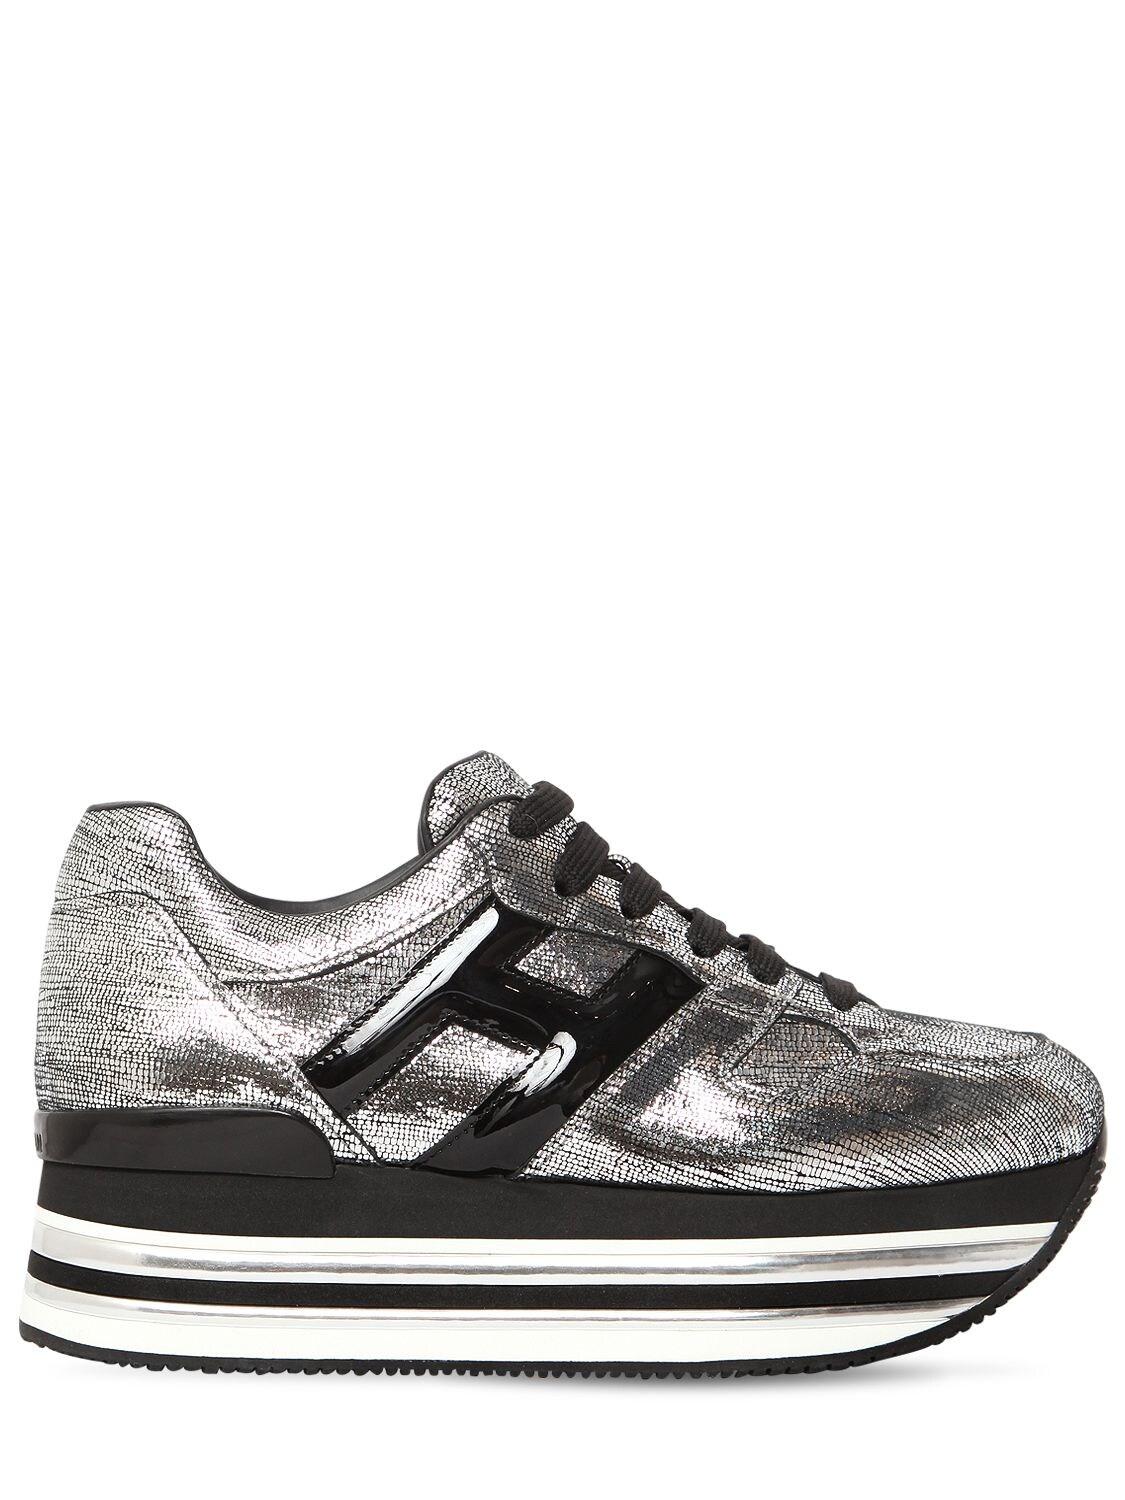 Hogan 70mm Maxi 222 Lamè Leather Sneakers in Silver (Metallic) - Lyst